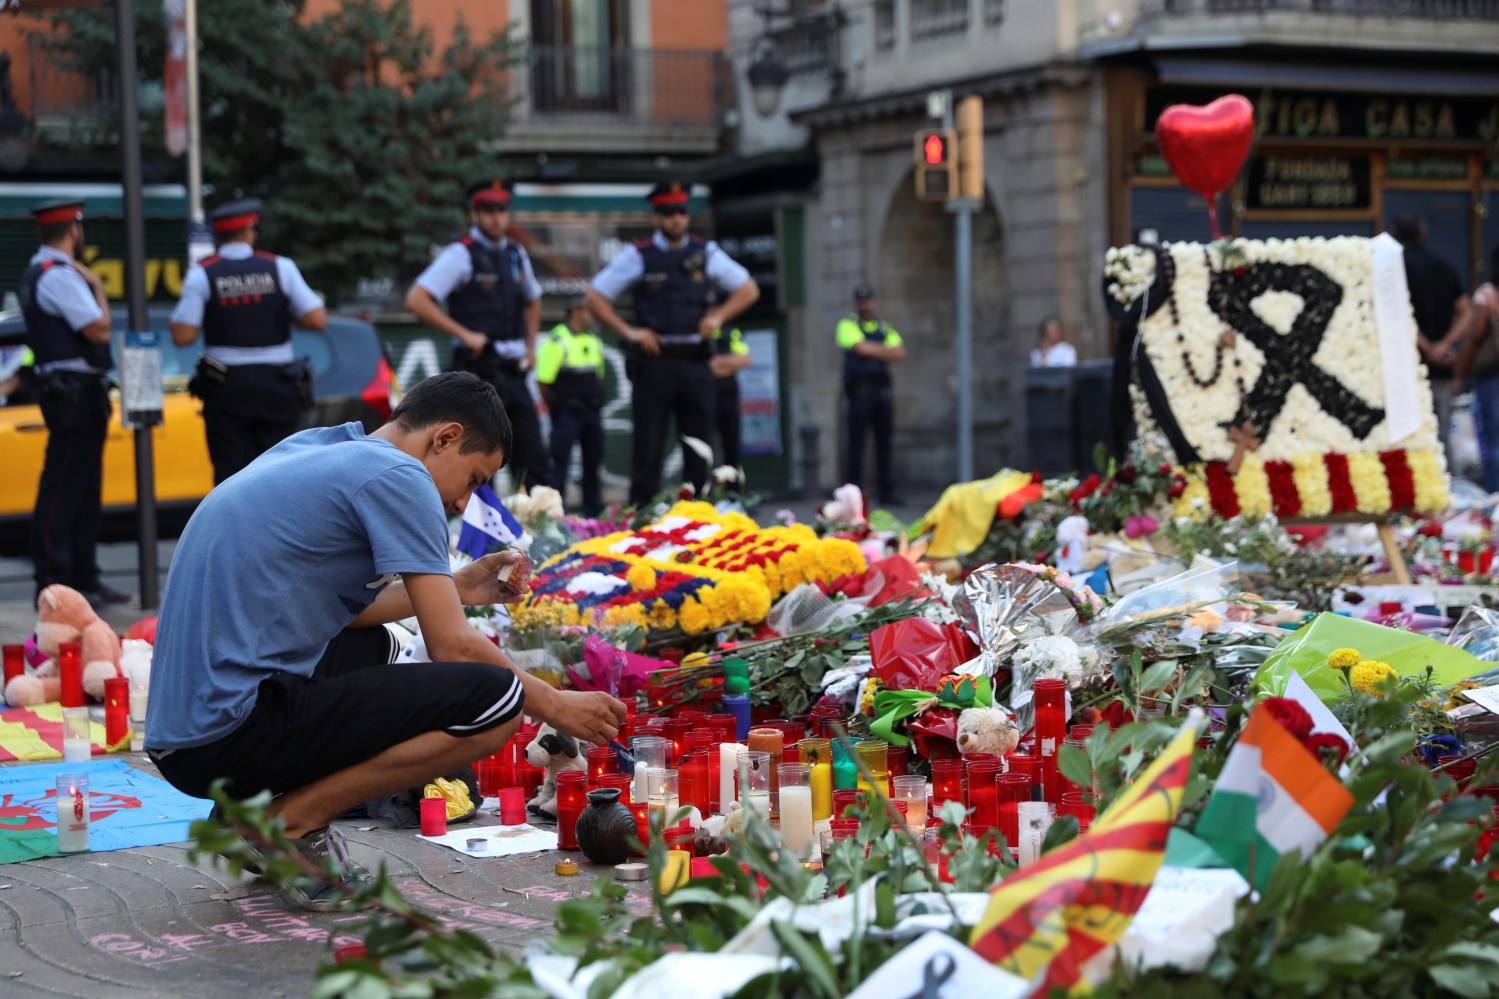 A man lights a candle at an impromptu memorial where a van crashed into pedestrians at Las Ramblas in Barcelona, Spain August 21, 2017. REUTERS/Susana Vera - RTS1CLTL